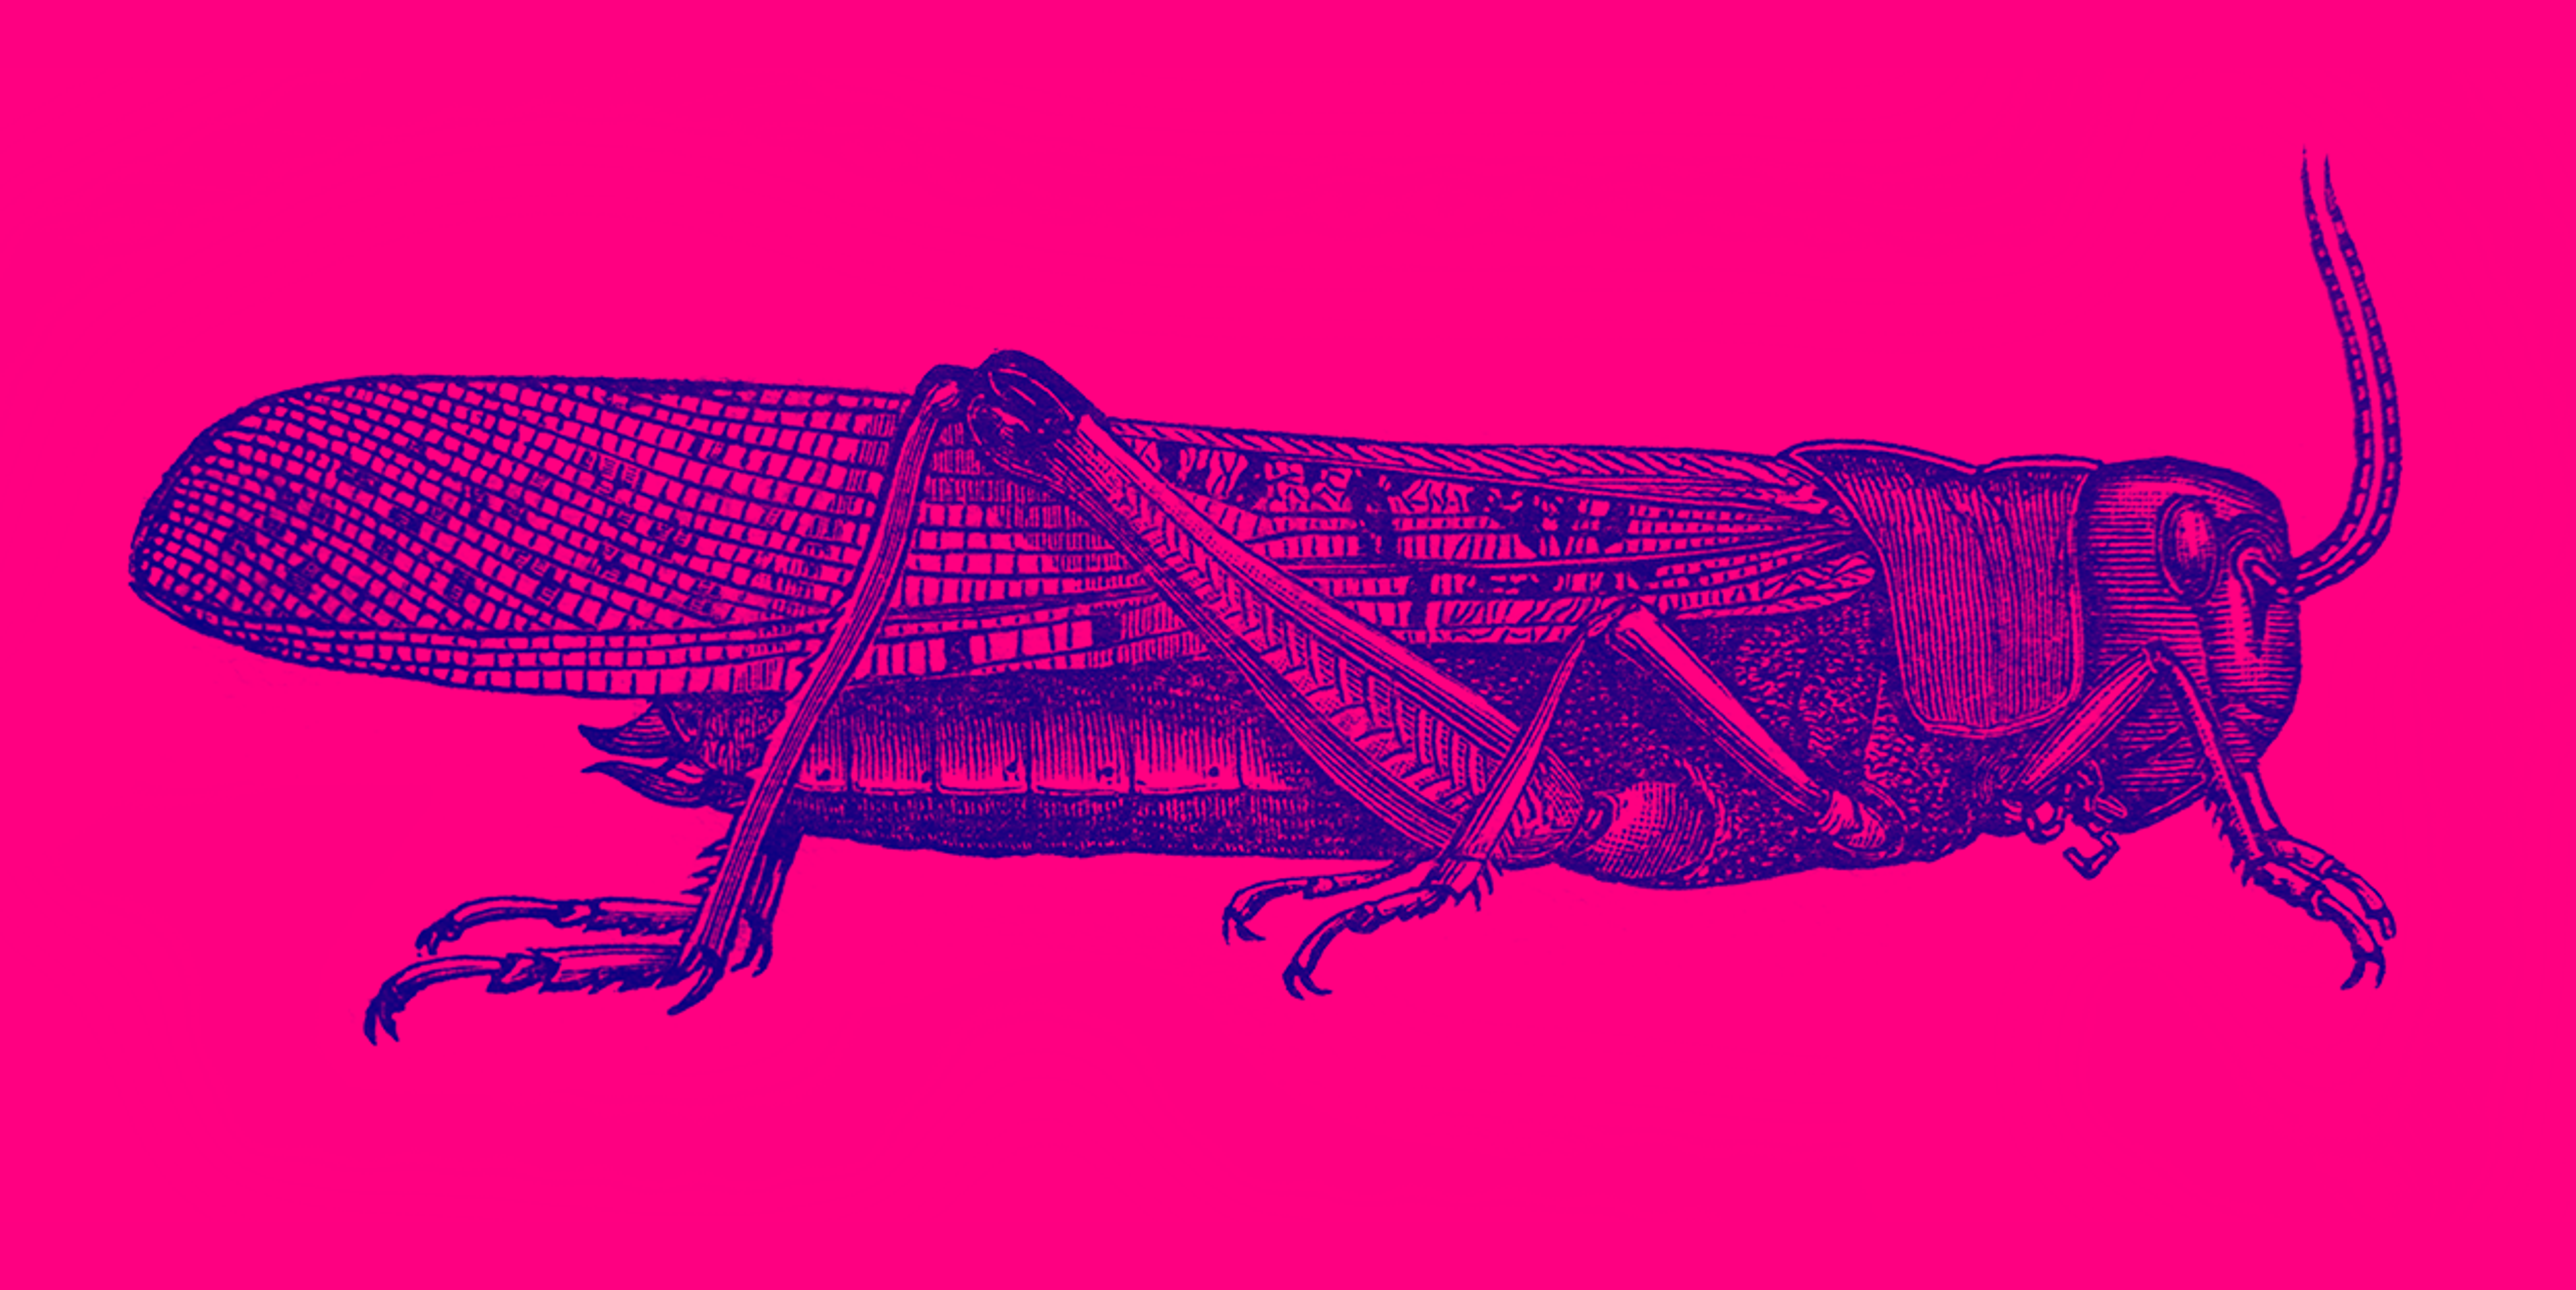 An illustration of a locust